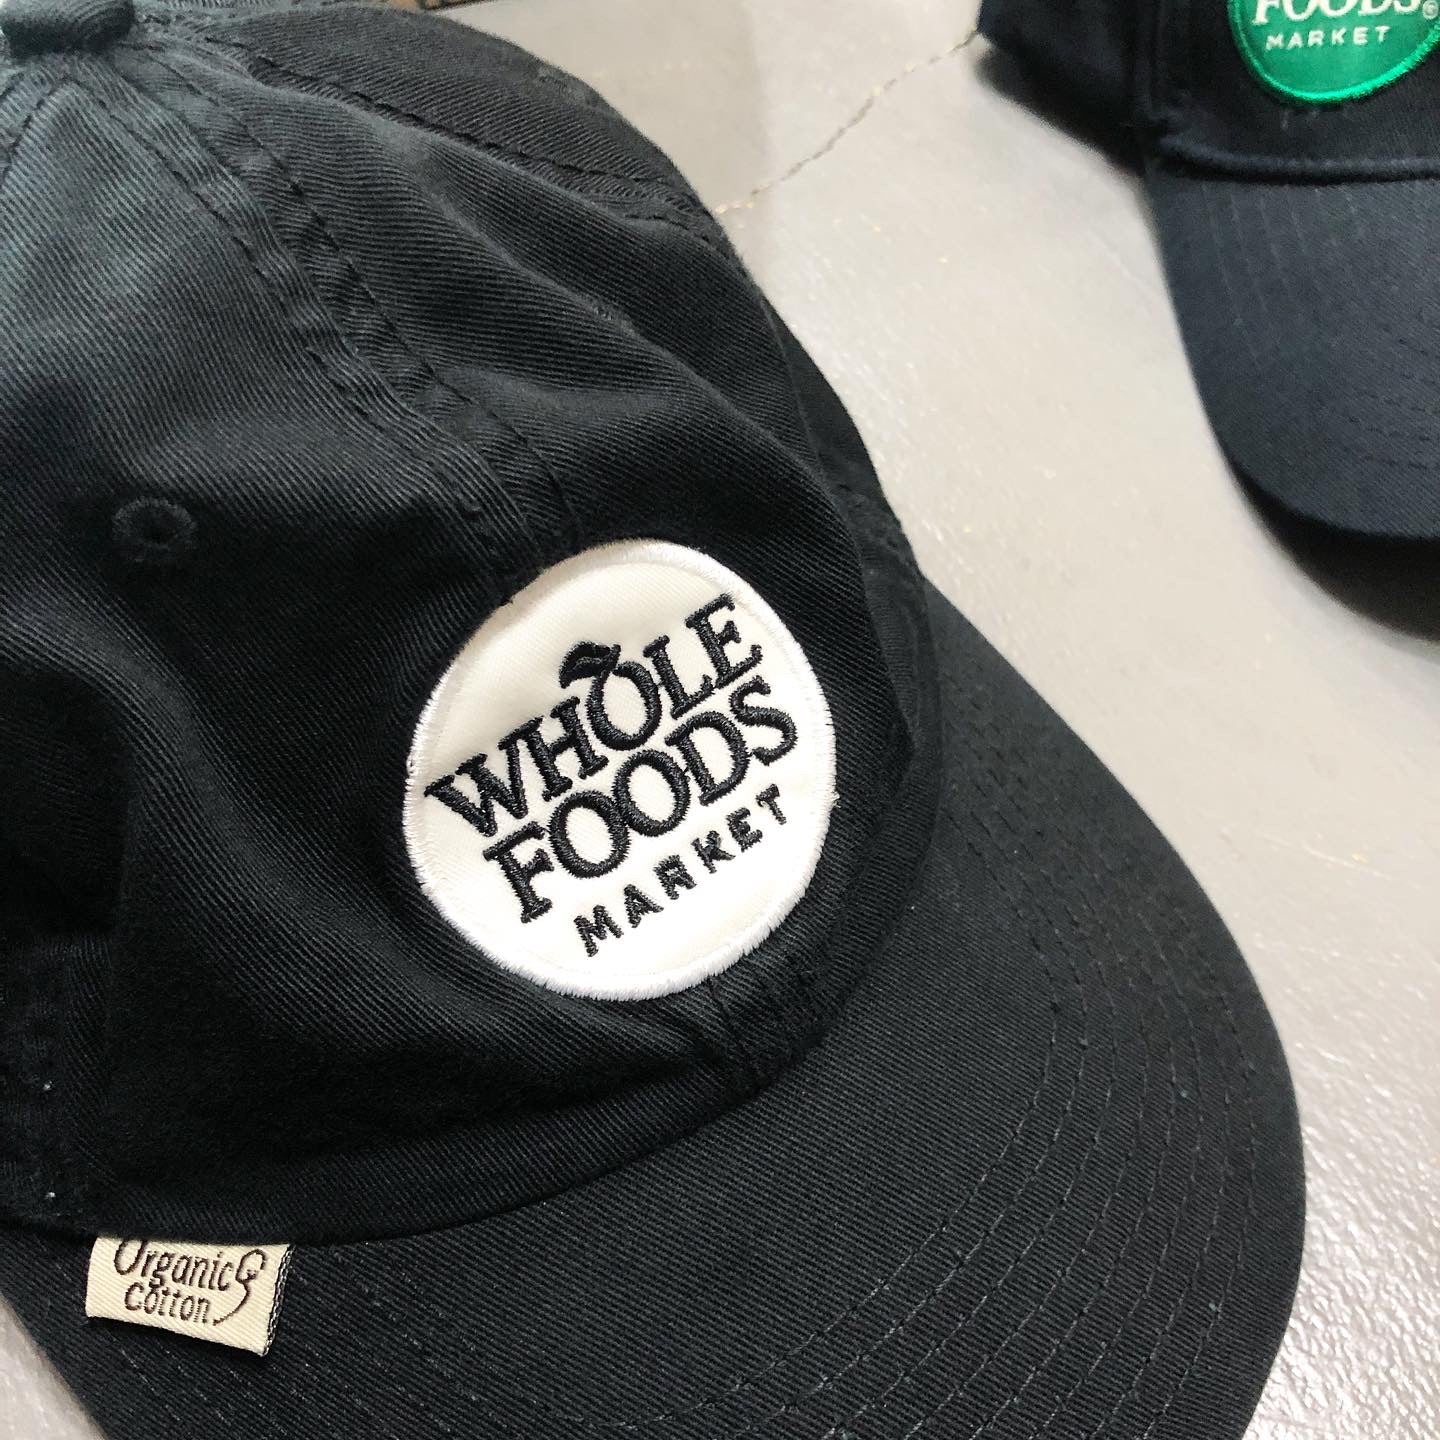 Whole Foods Market Staff Cap